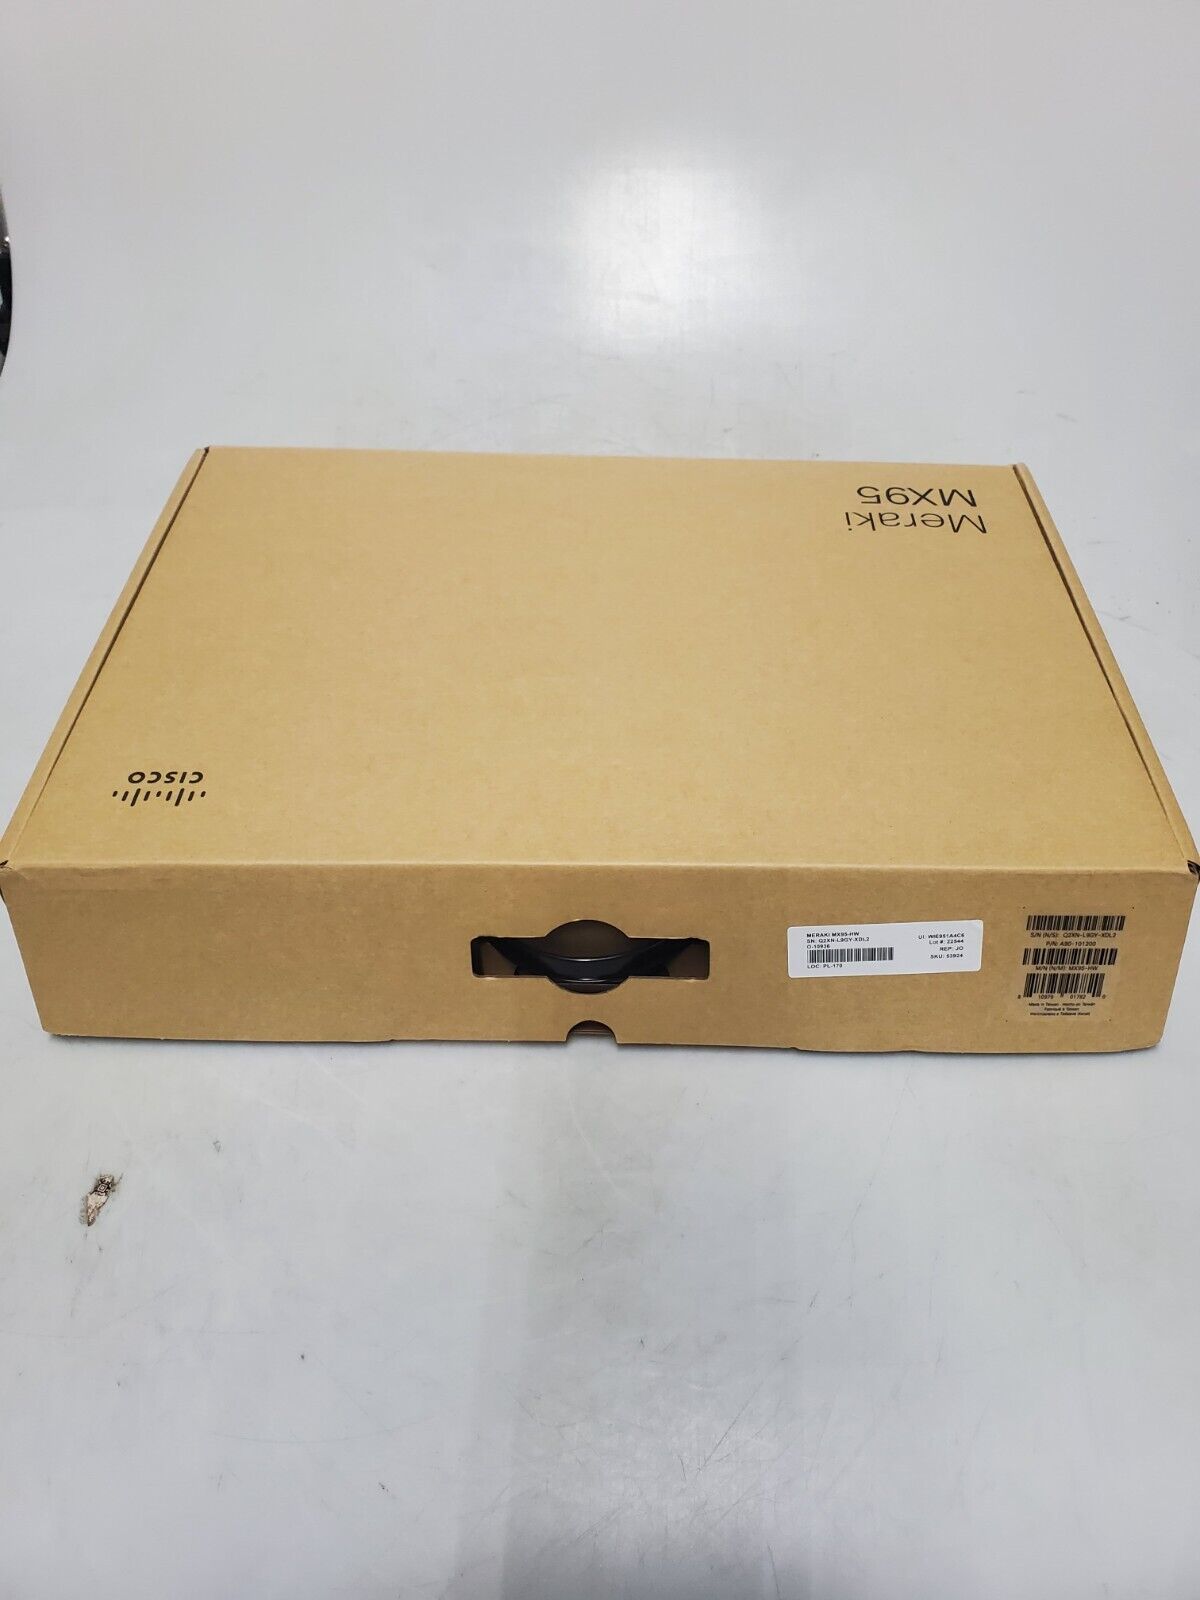 Cisco MX95-HW Meraki Security Appliance - Unclaimed NEW IN BOX